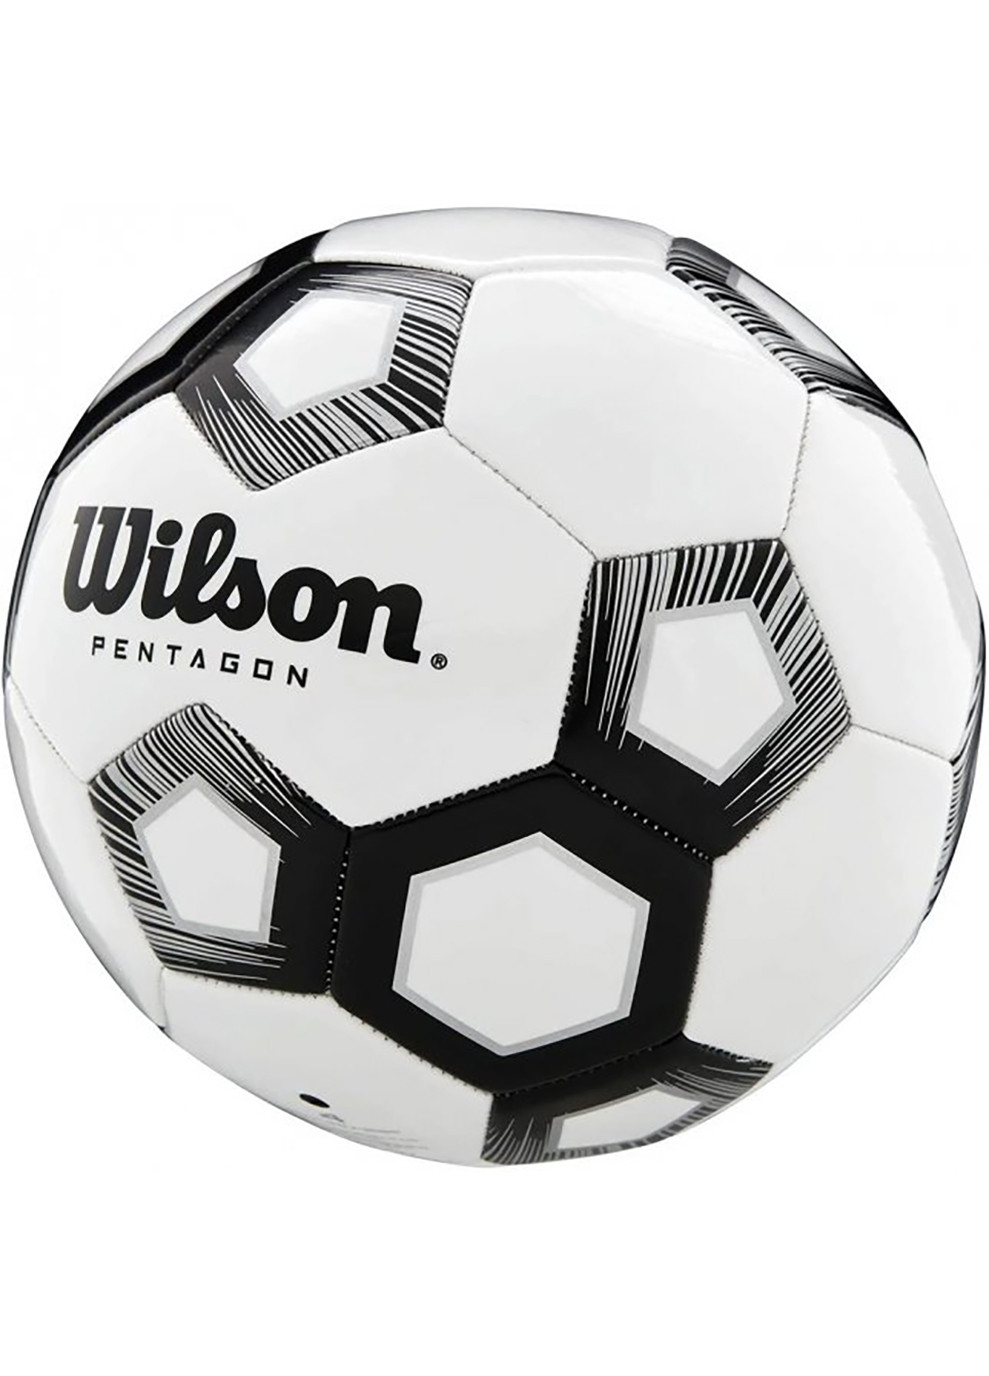 М'яч футбольний Pentagon white/black size 5 Wilson (260597401)